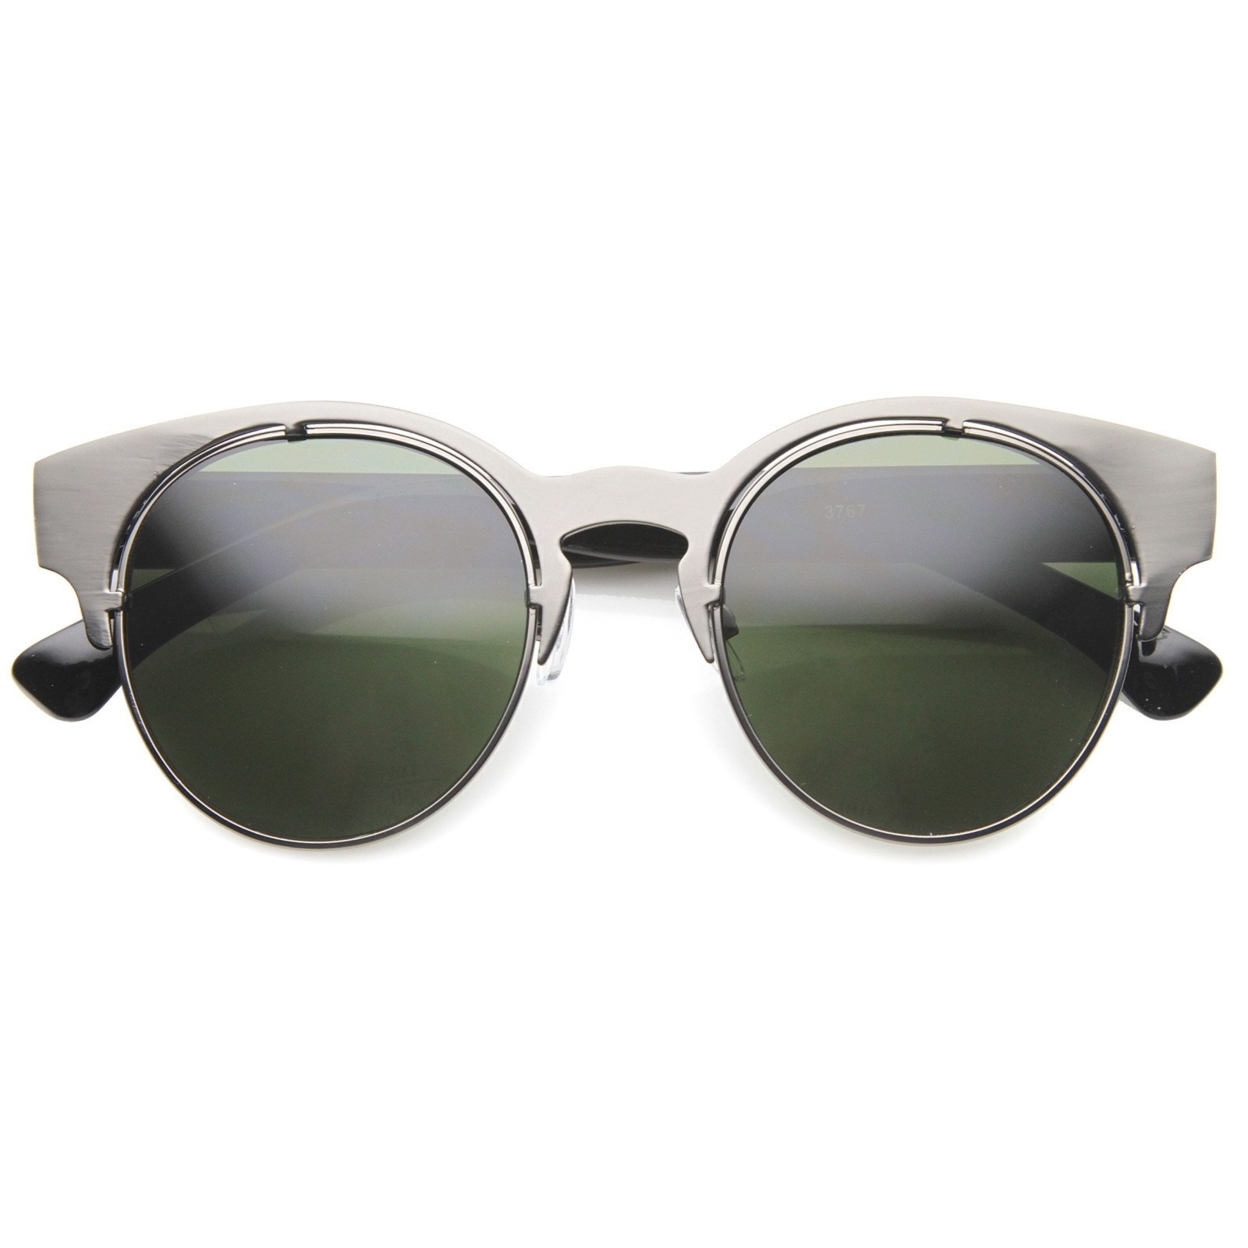 Mens Metal Semi-Rimless Sunglasses With UV400 Protected Composite Lens - Silver-Black / Smoke